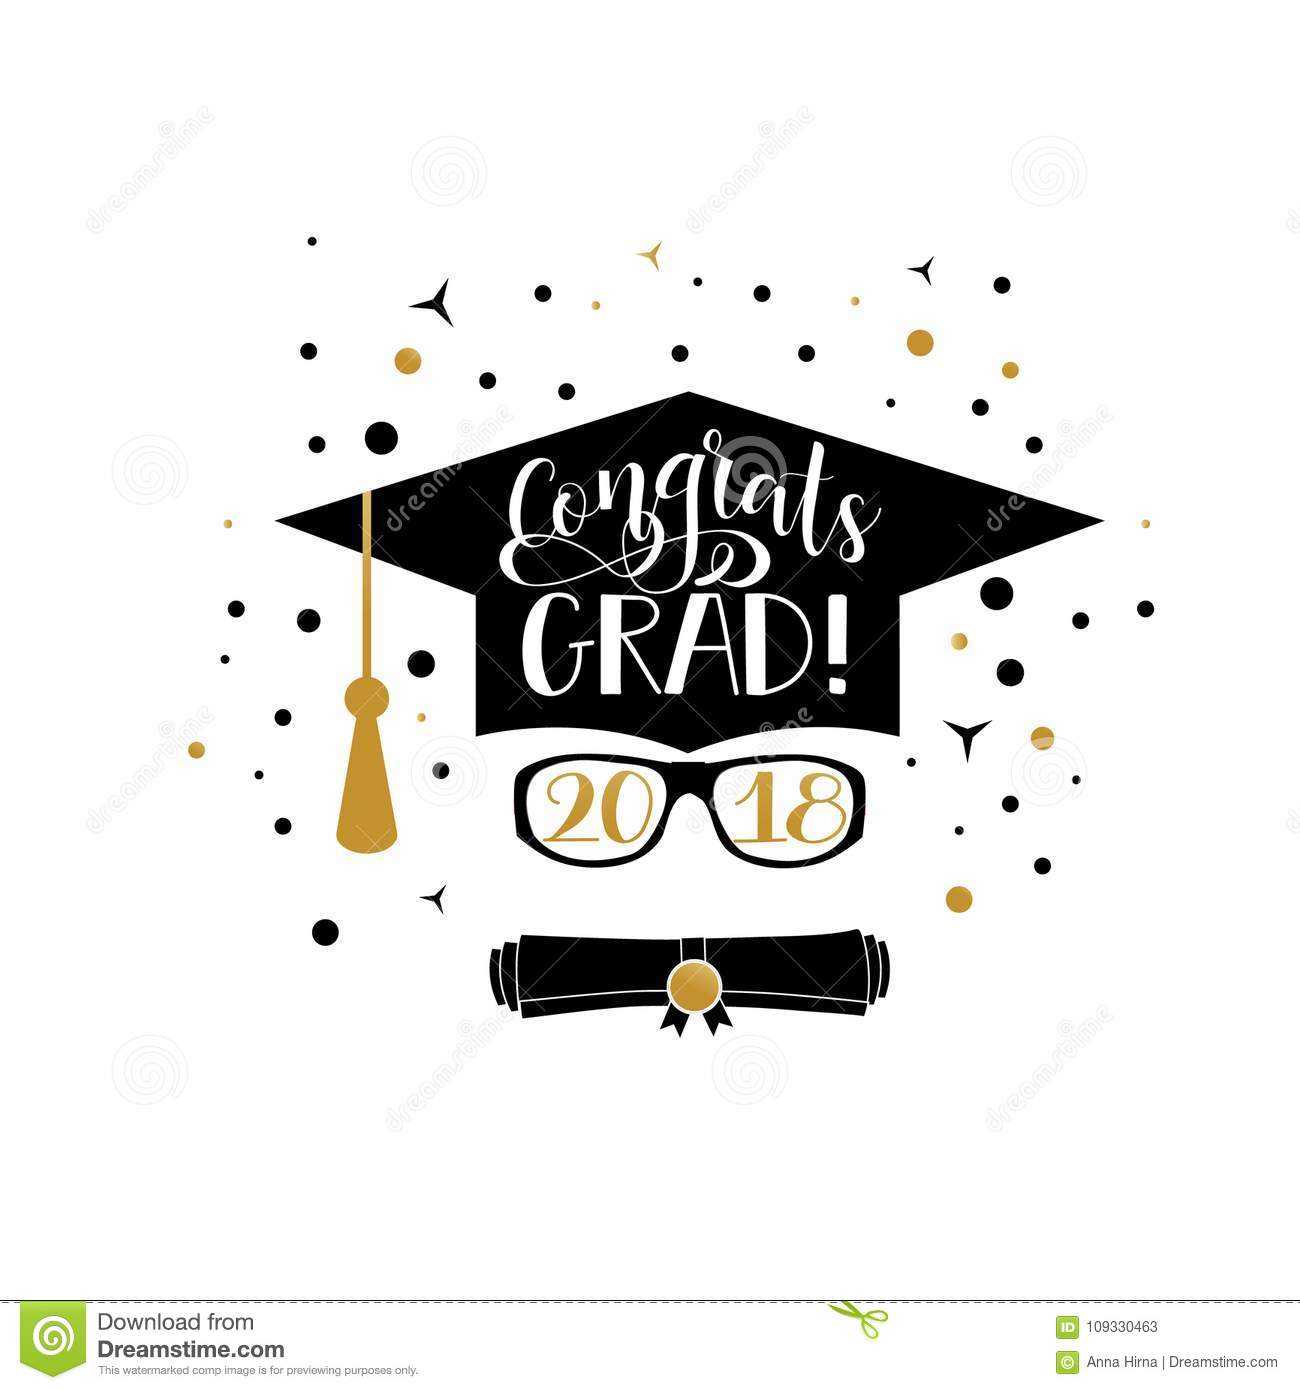 Congrats Grad 2018 Lettering. Congratulations Graduate With Graduation Banner Template